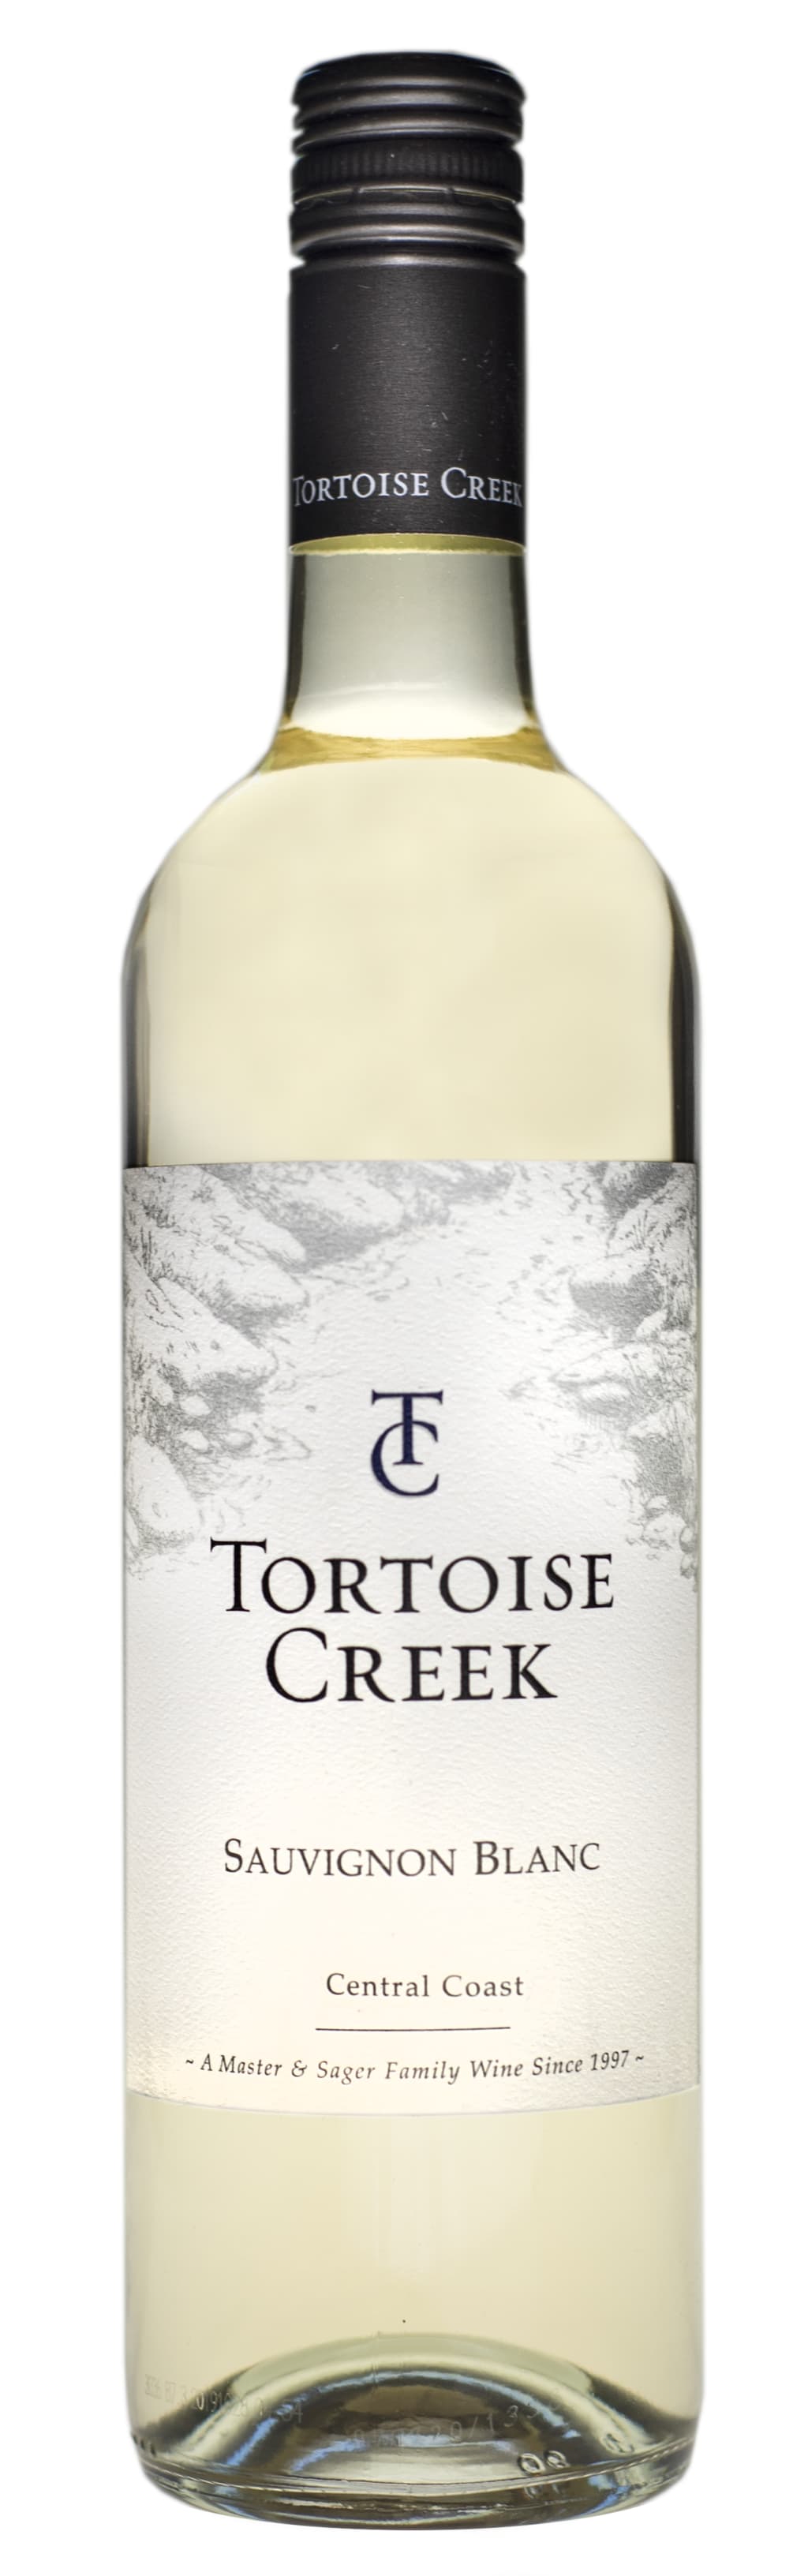 Tortoise Creek Sauvignon Blanc 2019